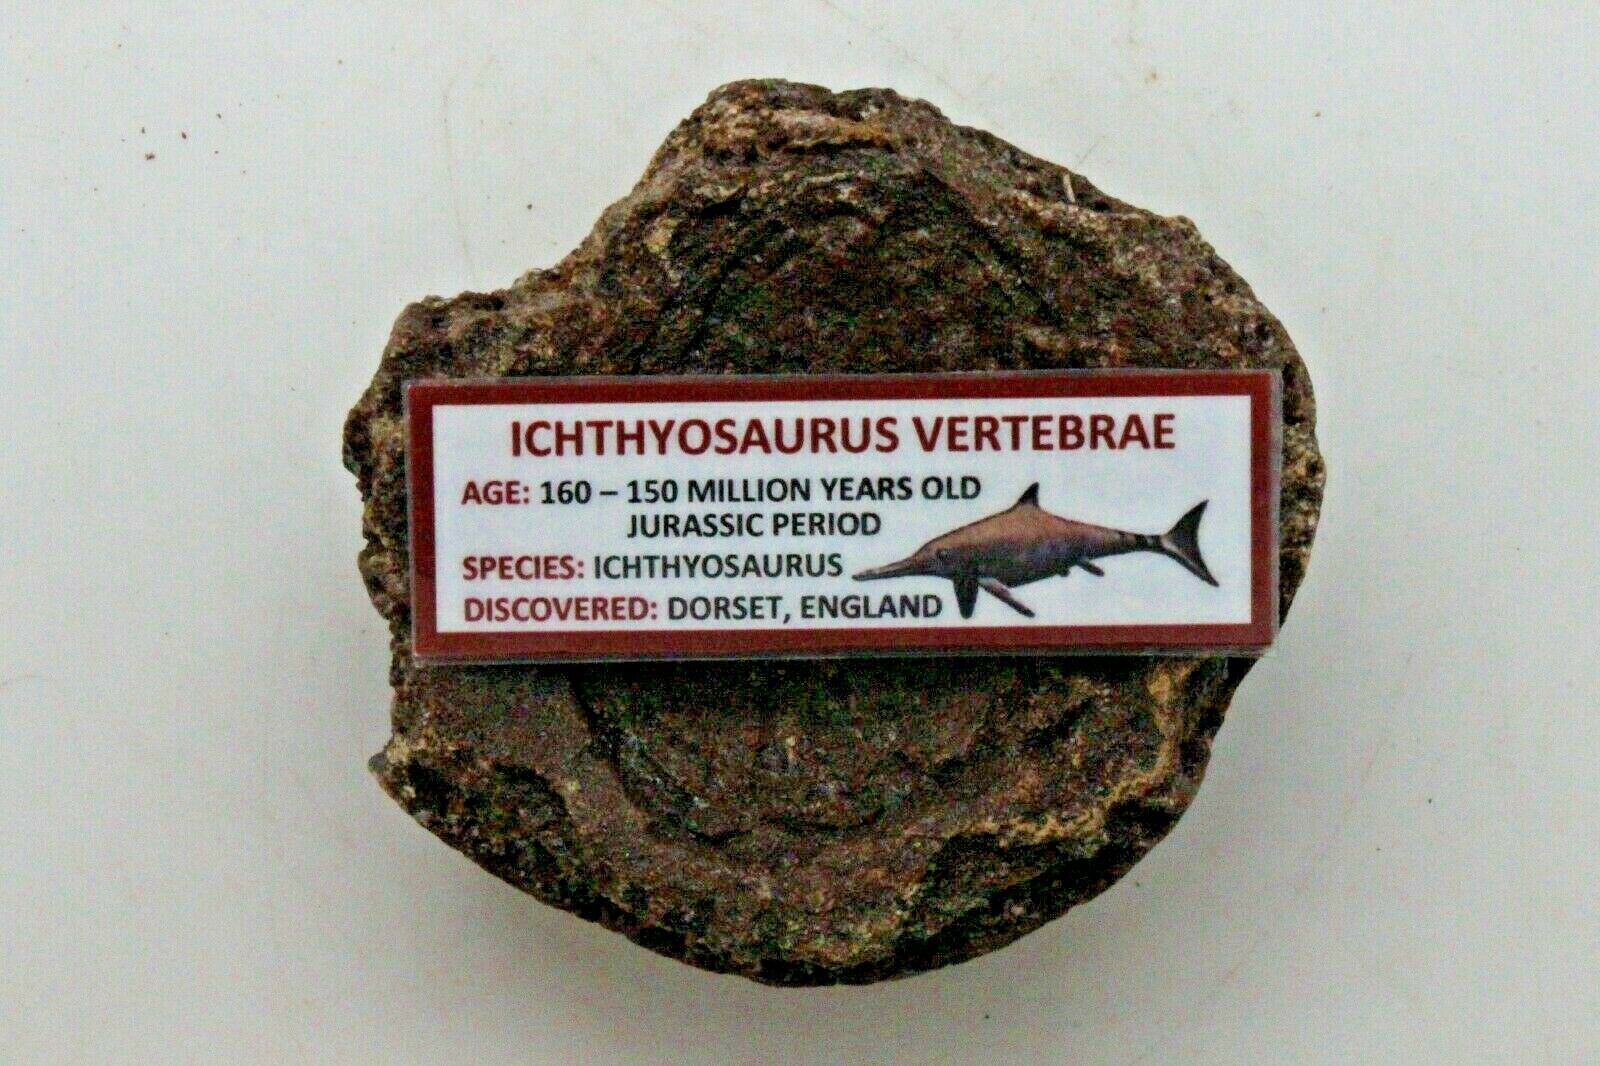 Ancient Ichthyosaurus Vertebrae - 160/150 Myo - England - Jurassic Period